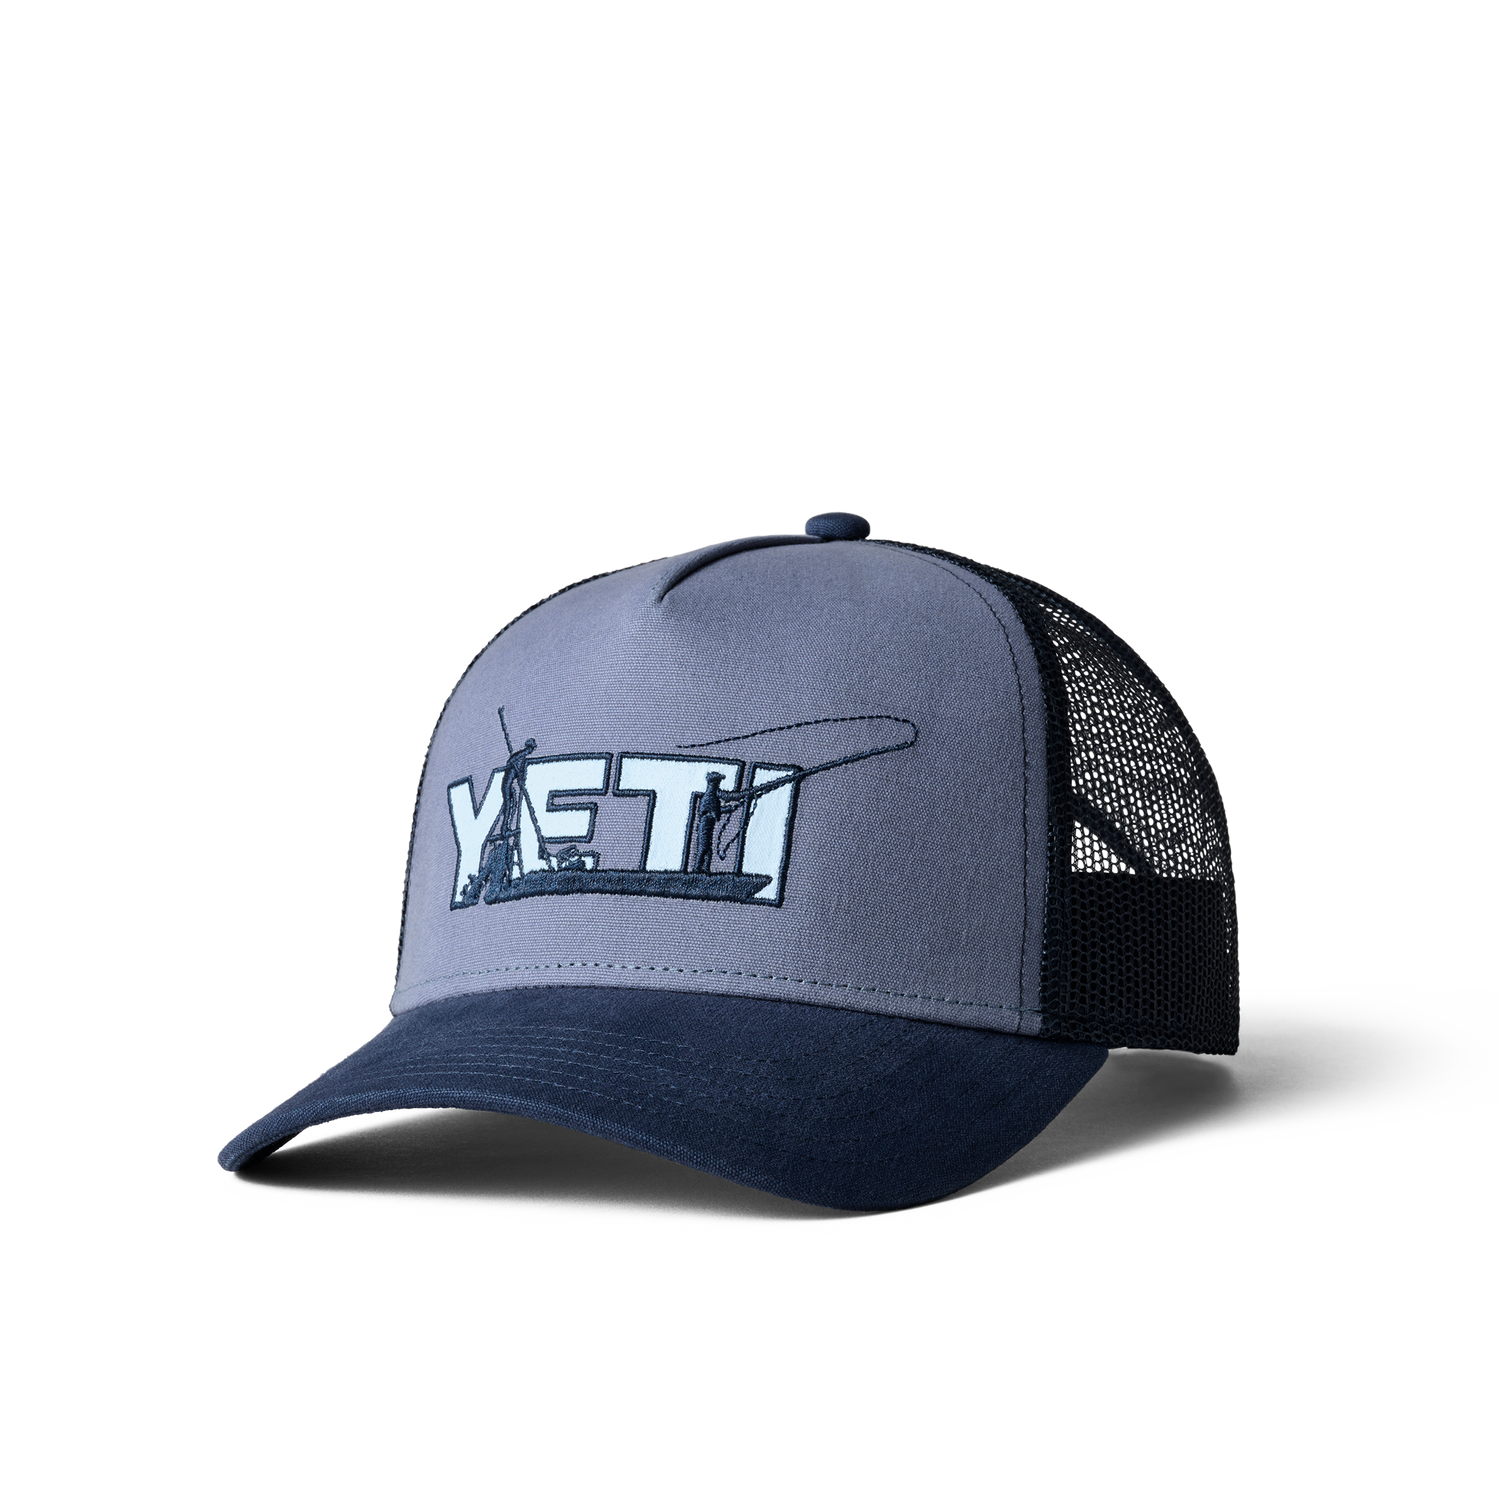 Yeti Outdoor Hat Khaki